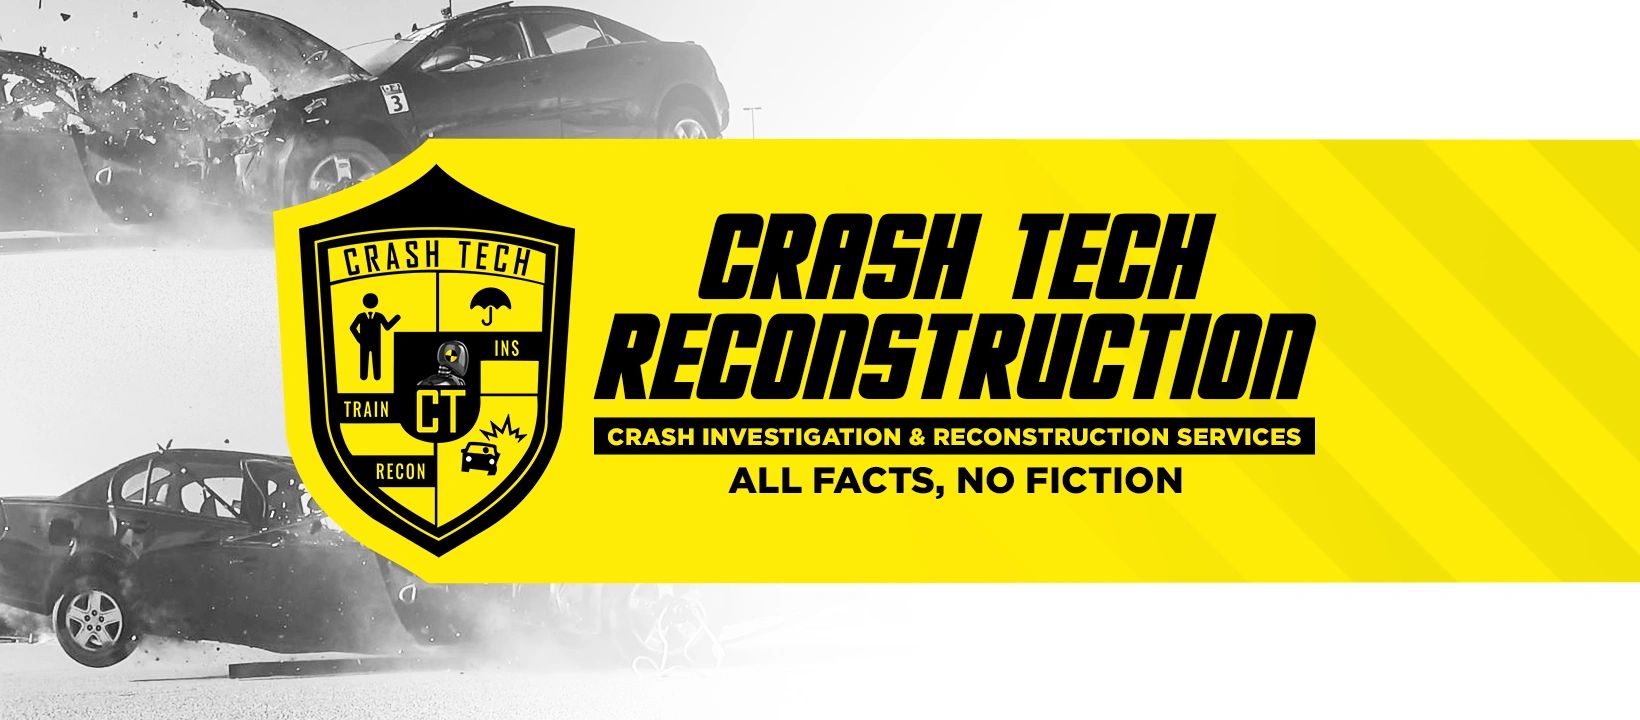 (c) Crashtechreconstruction.com